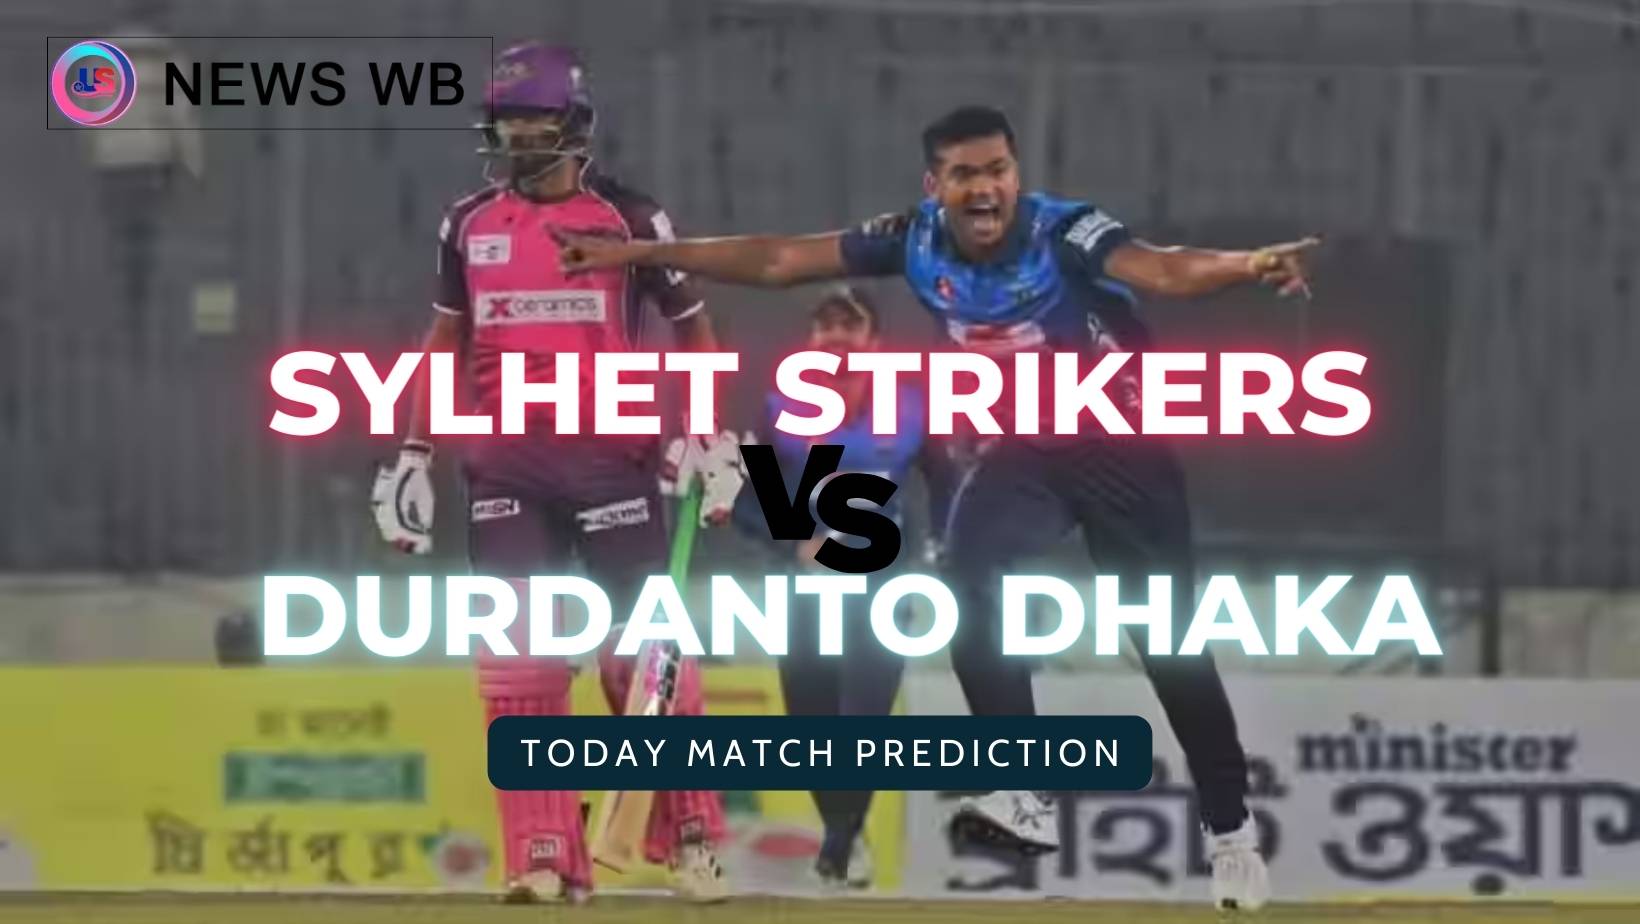 Today Match Prediction: DRD vs SYS Dream11 Team, Durdanto Dhaka vs Sylhet Strikers 24th Match, Who Will Win?